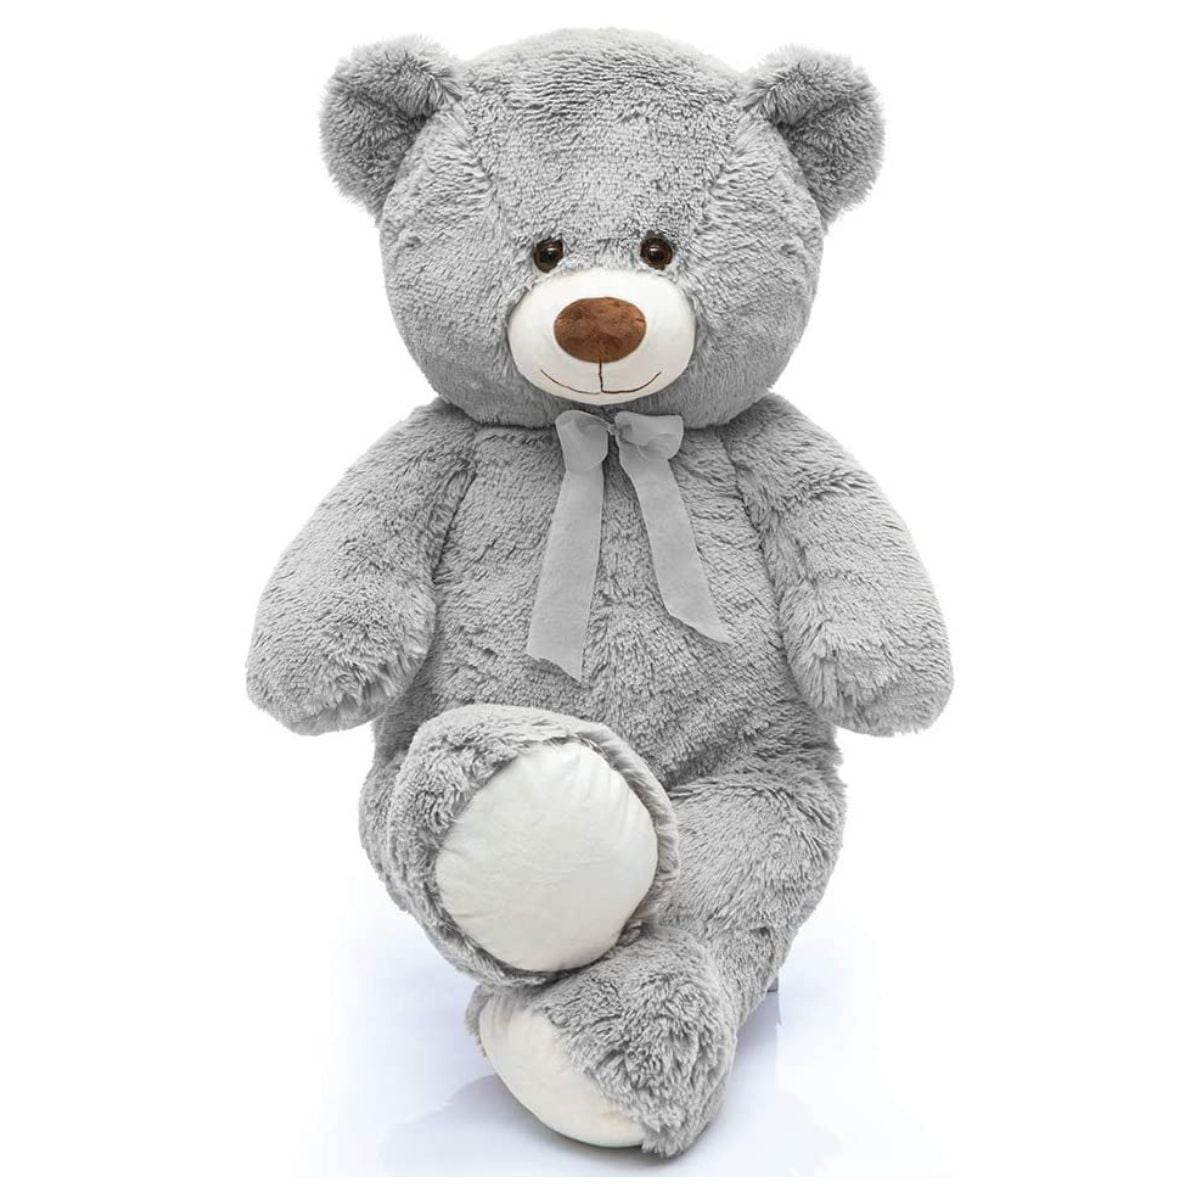 MorisMos Giant Teddy Bear 35.4'' Soft Stuffed Animal Big Bear Plush Toy